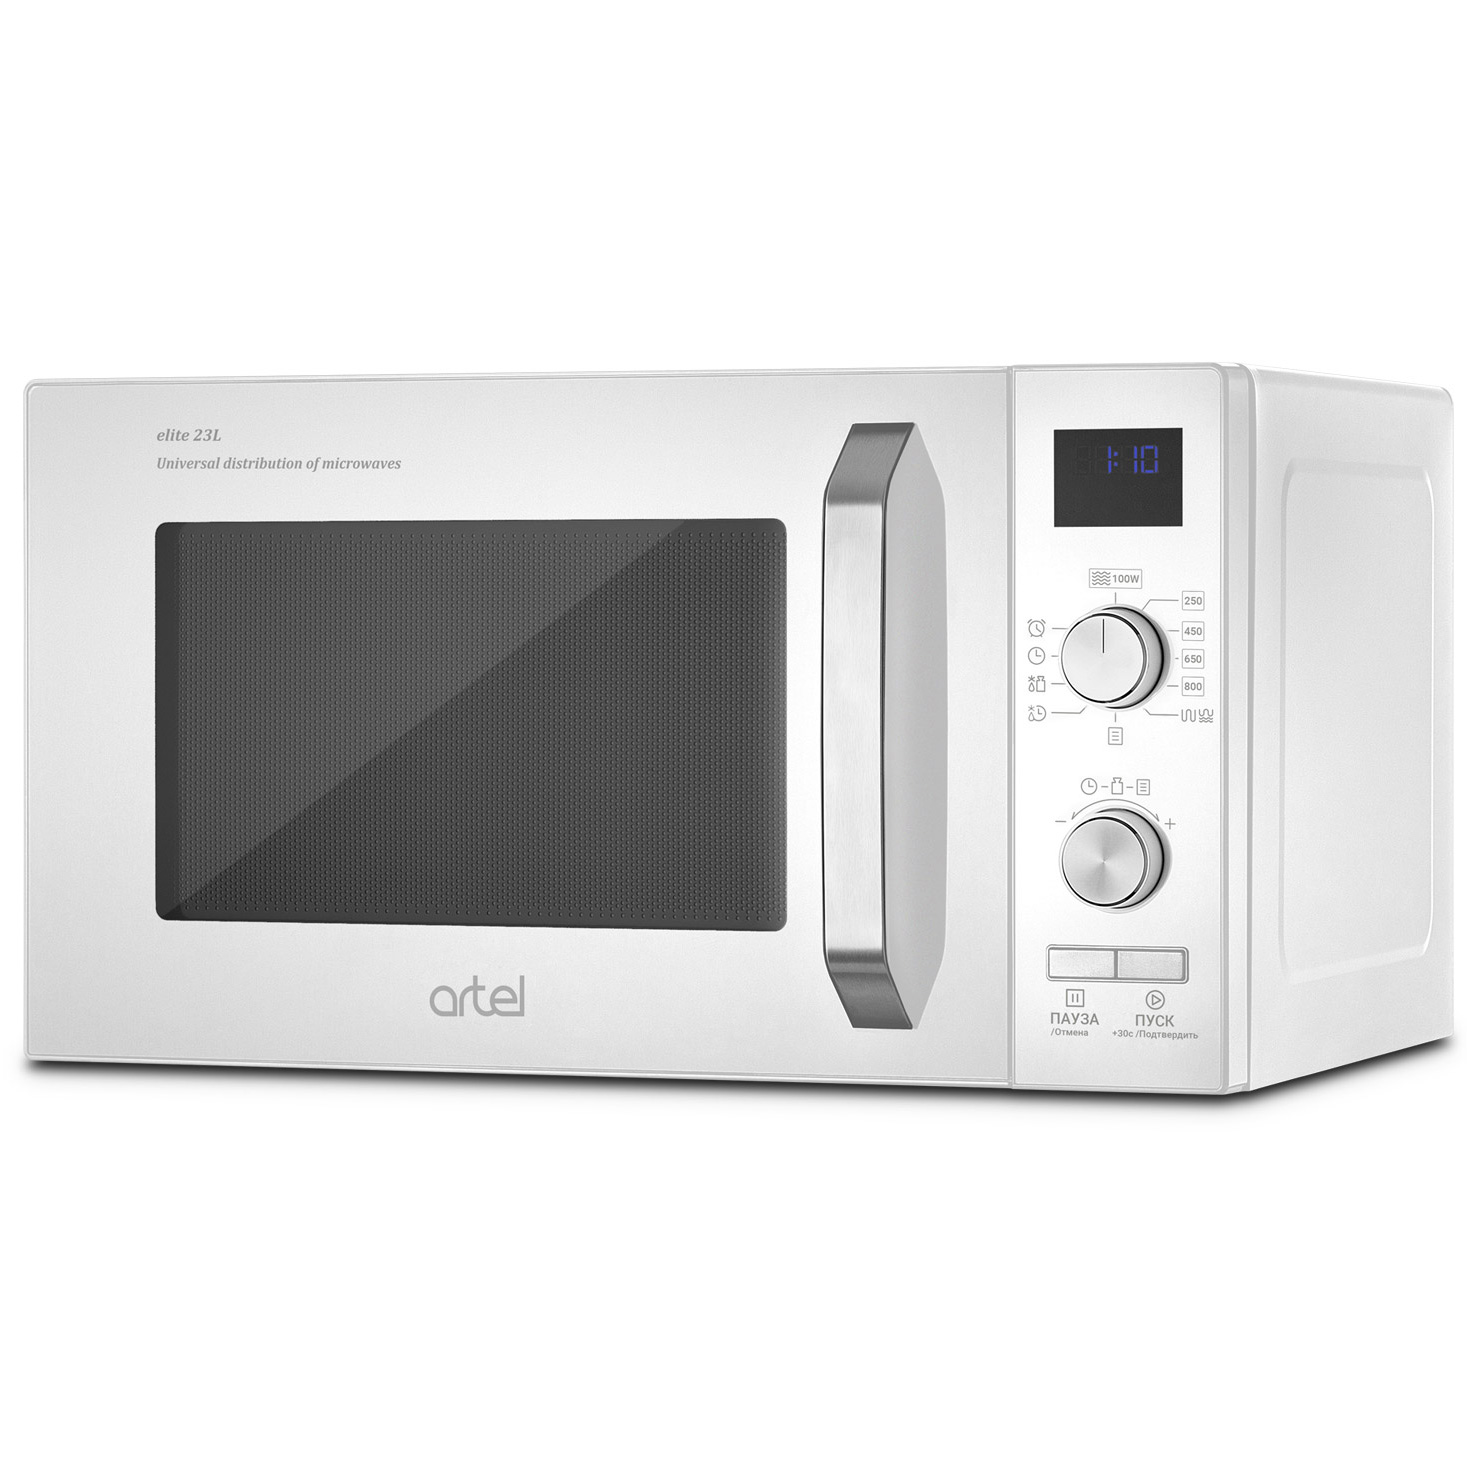 Artel GWD 0323 microwave